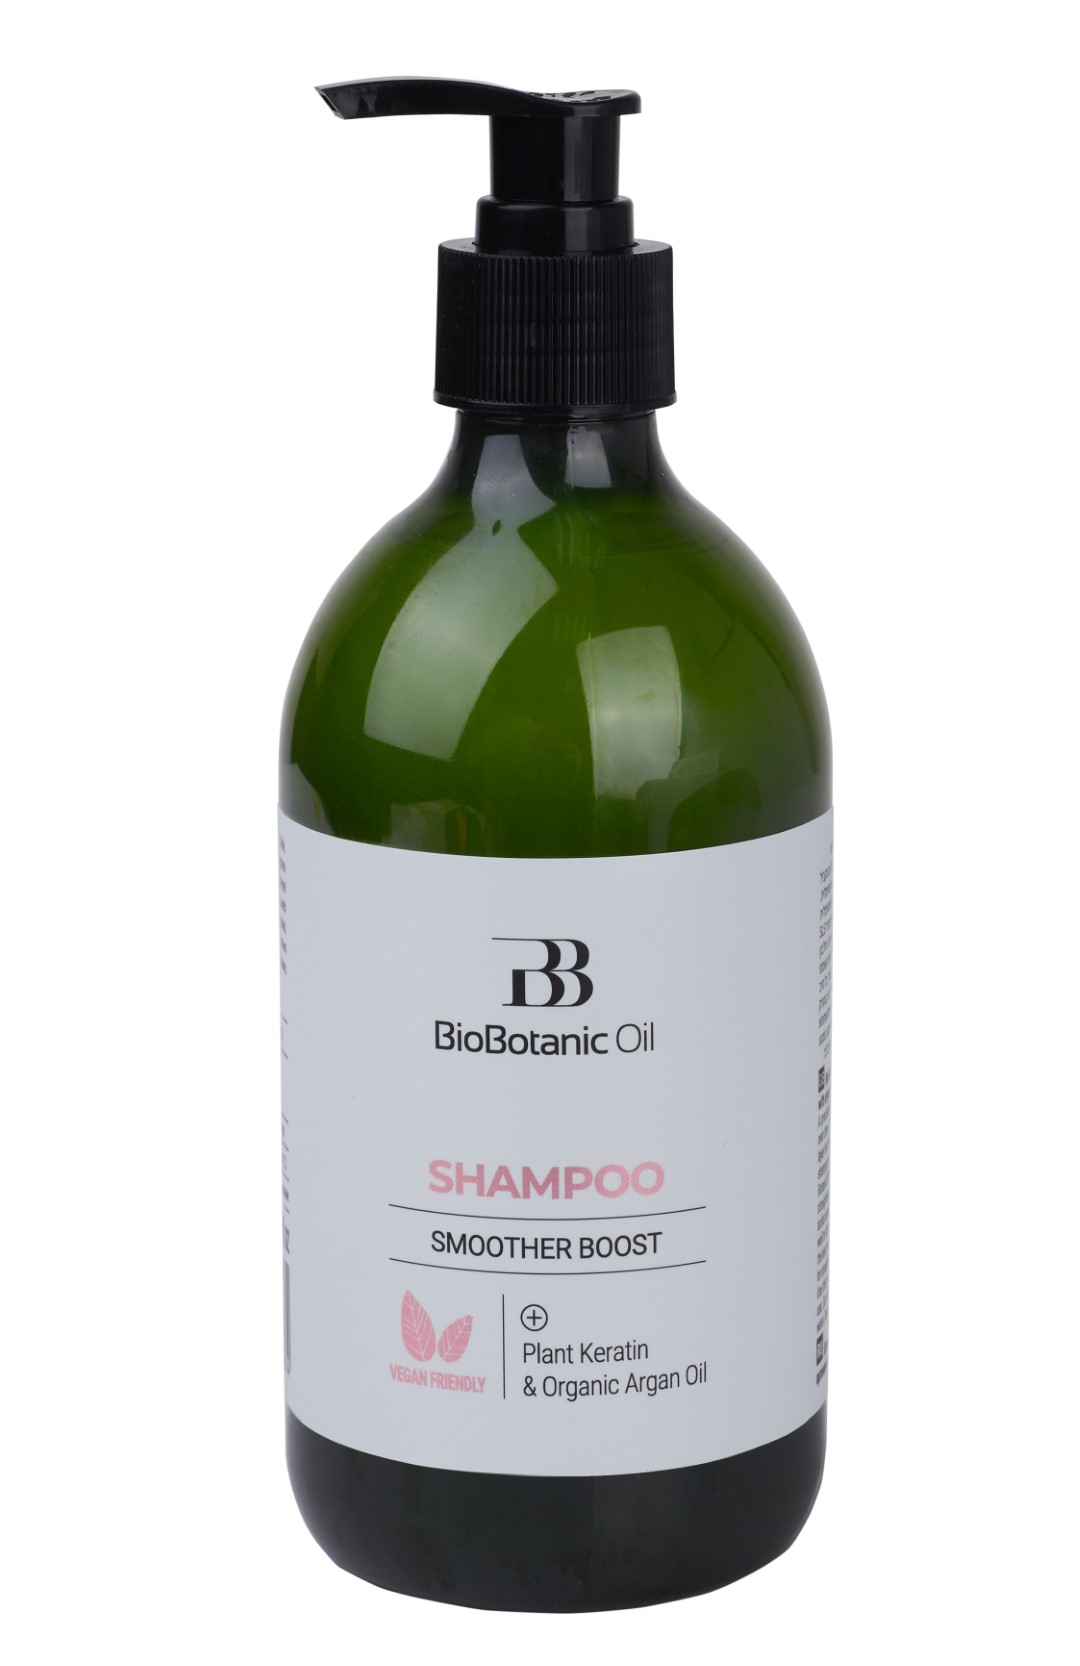 Salt-free shampoo for smooth hair